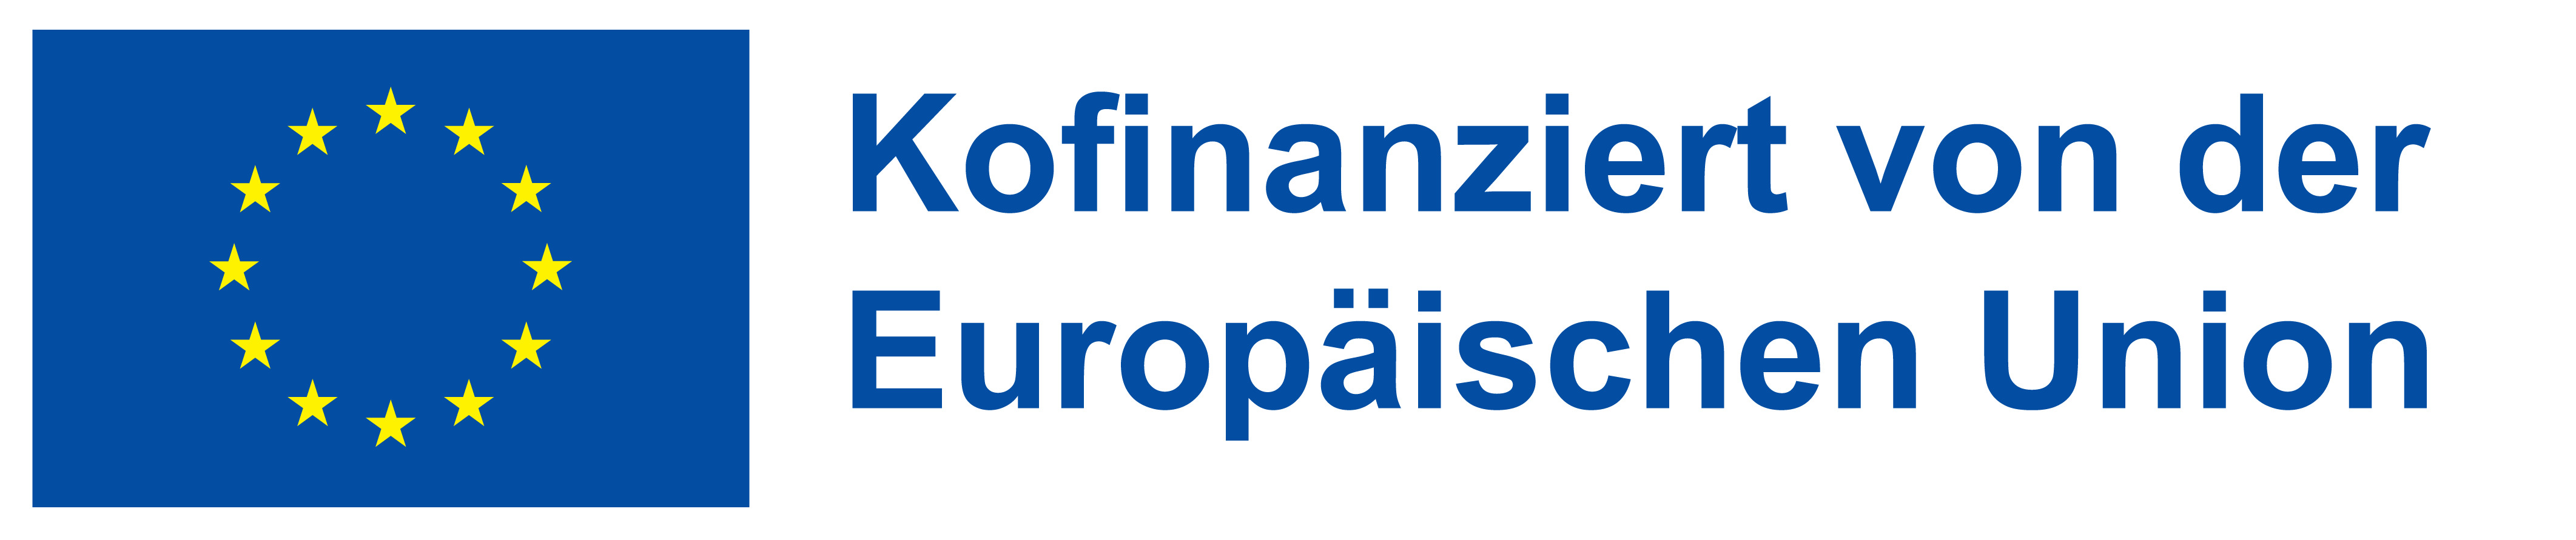 Logo_Kofinanziert Europäische Union